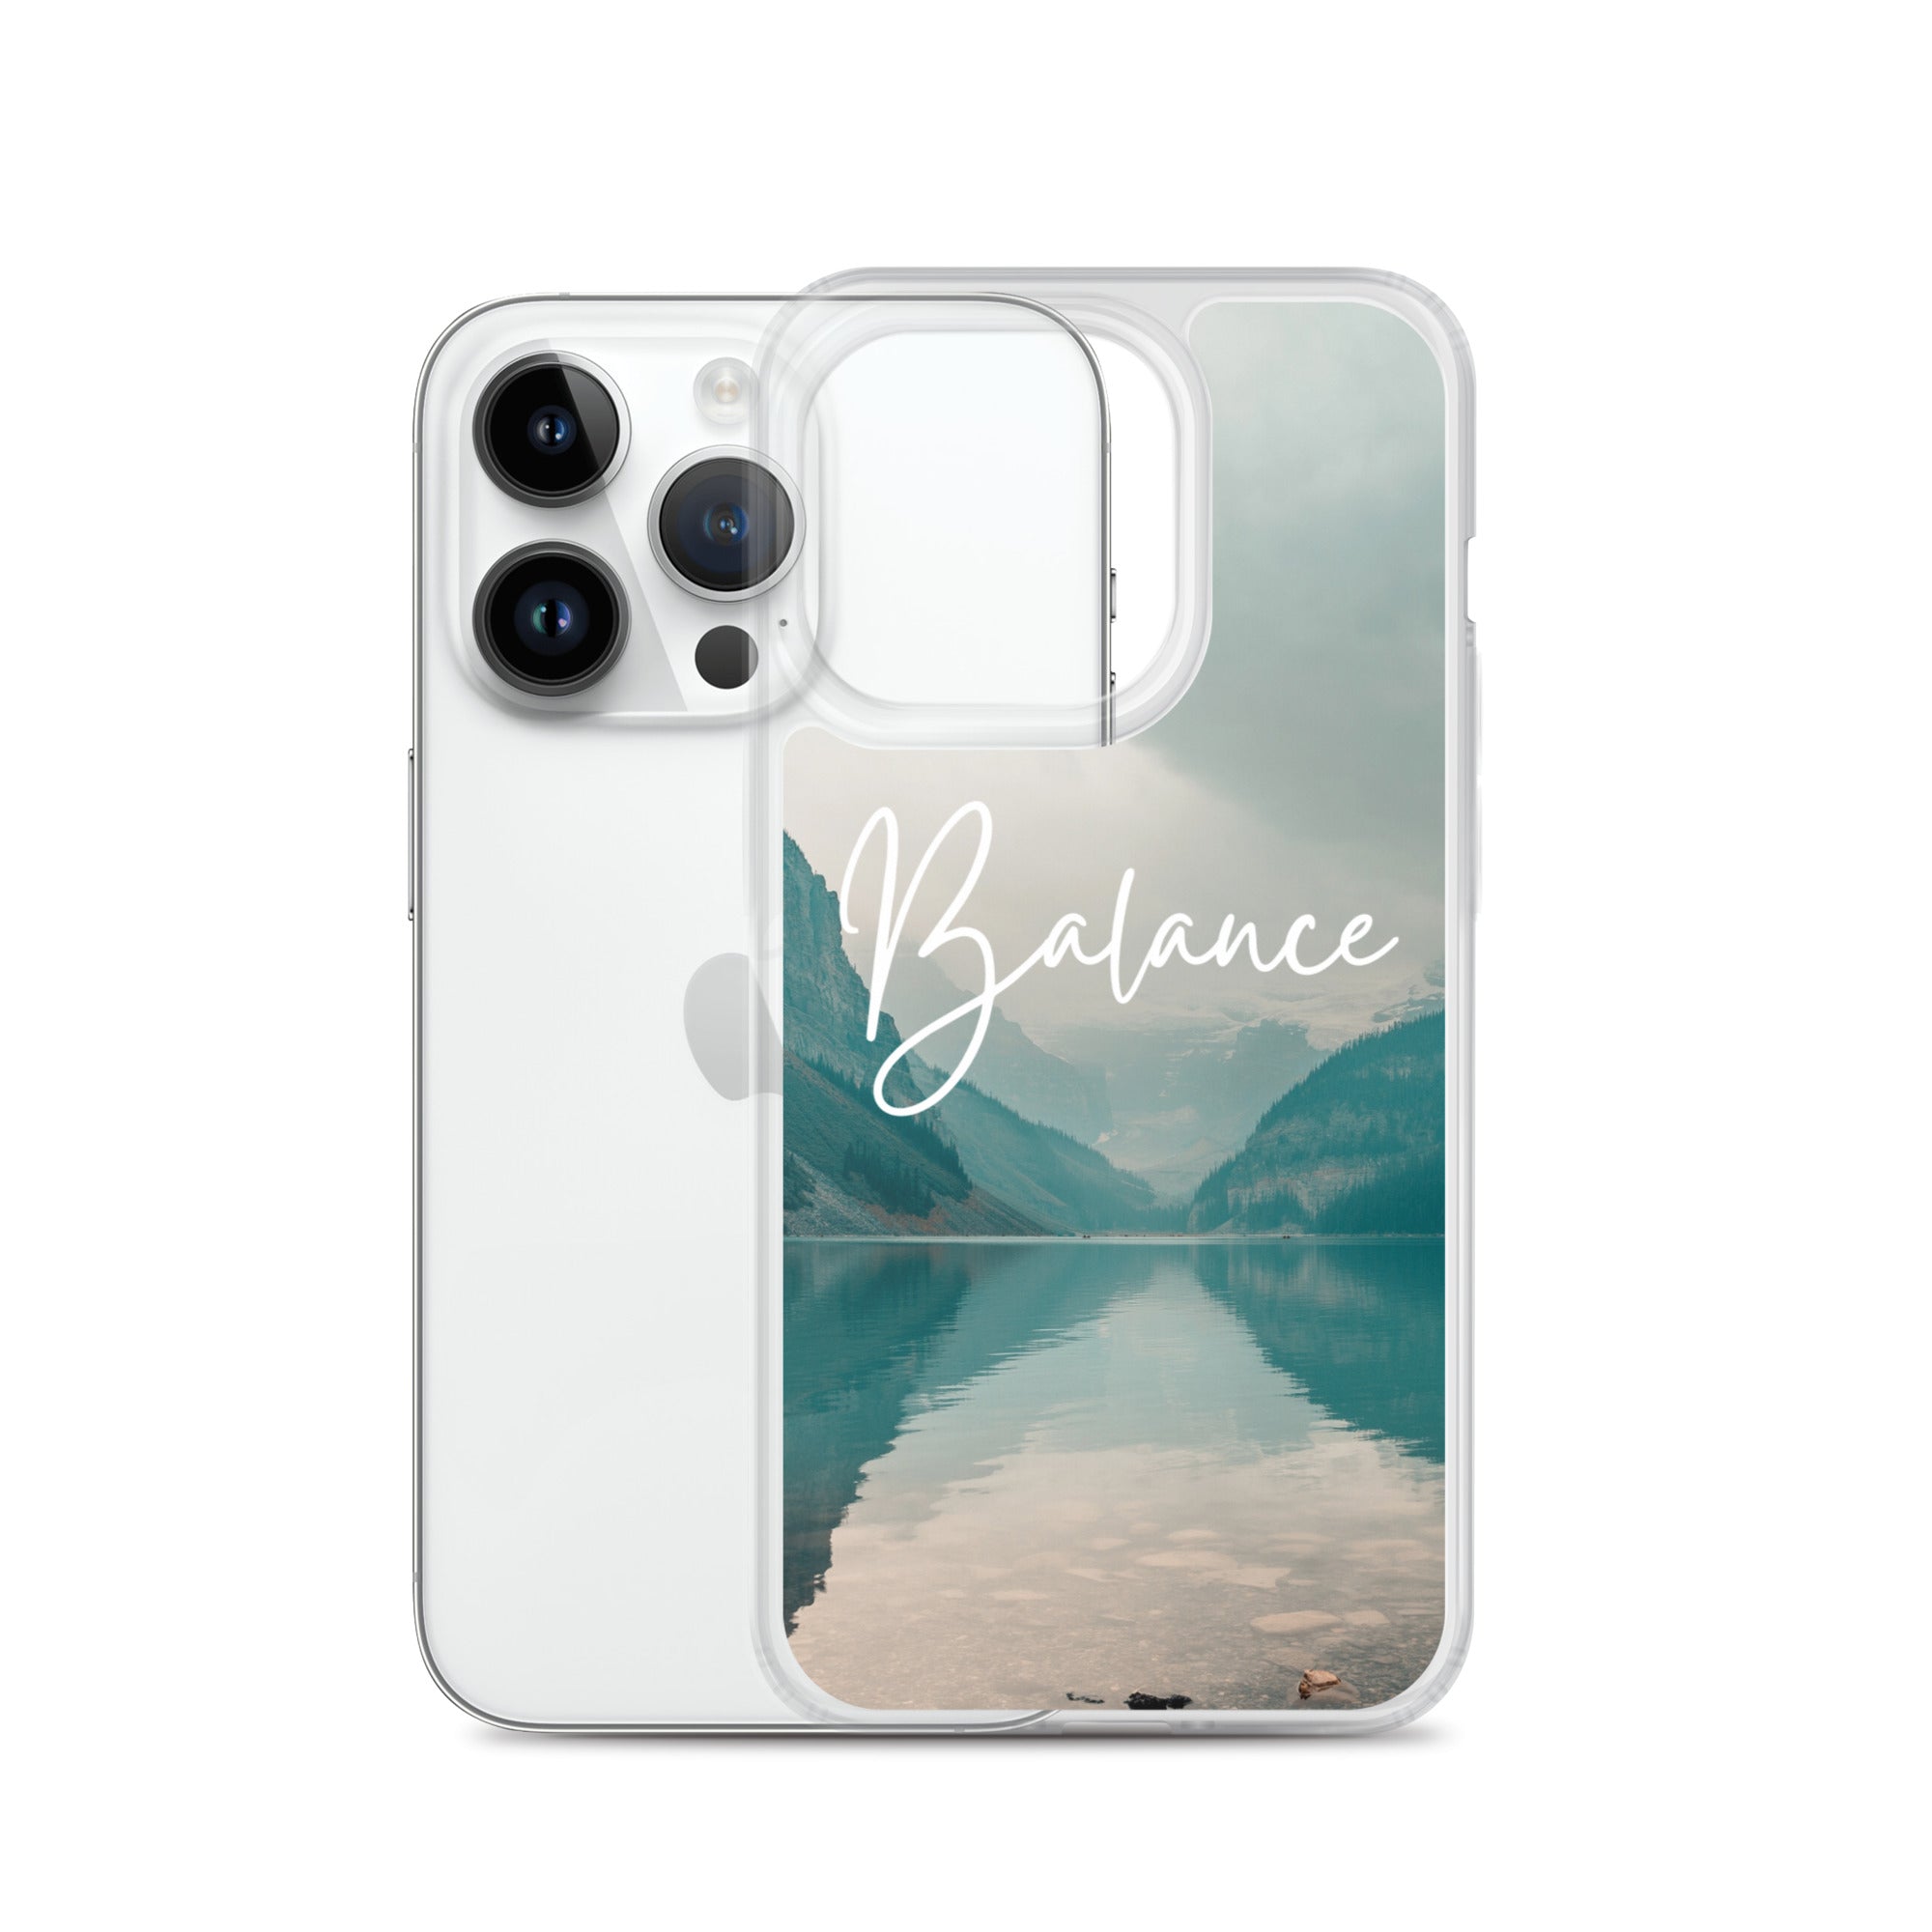 iPhone Case - Balance